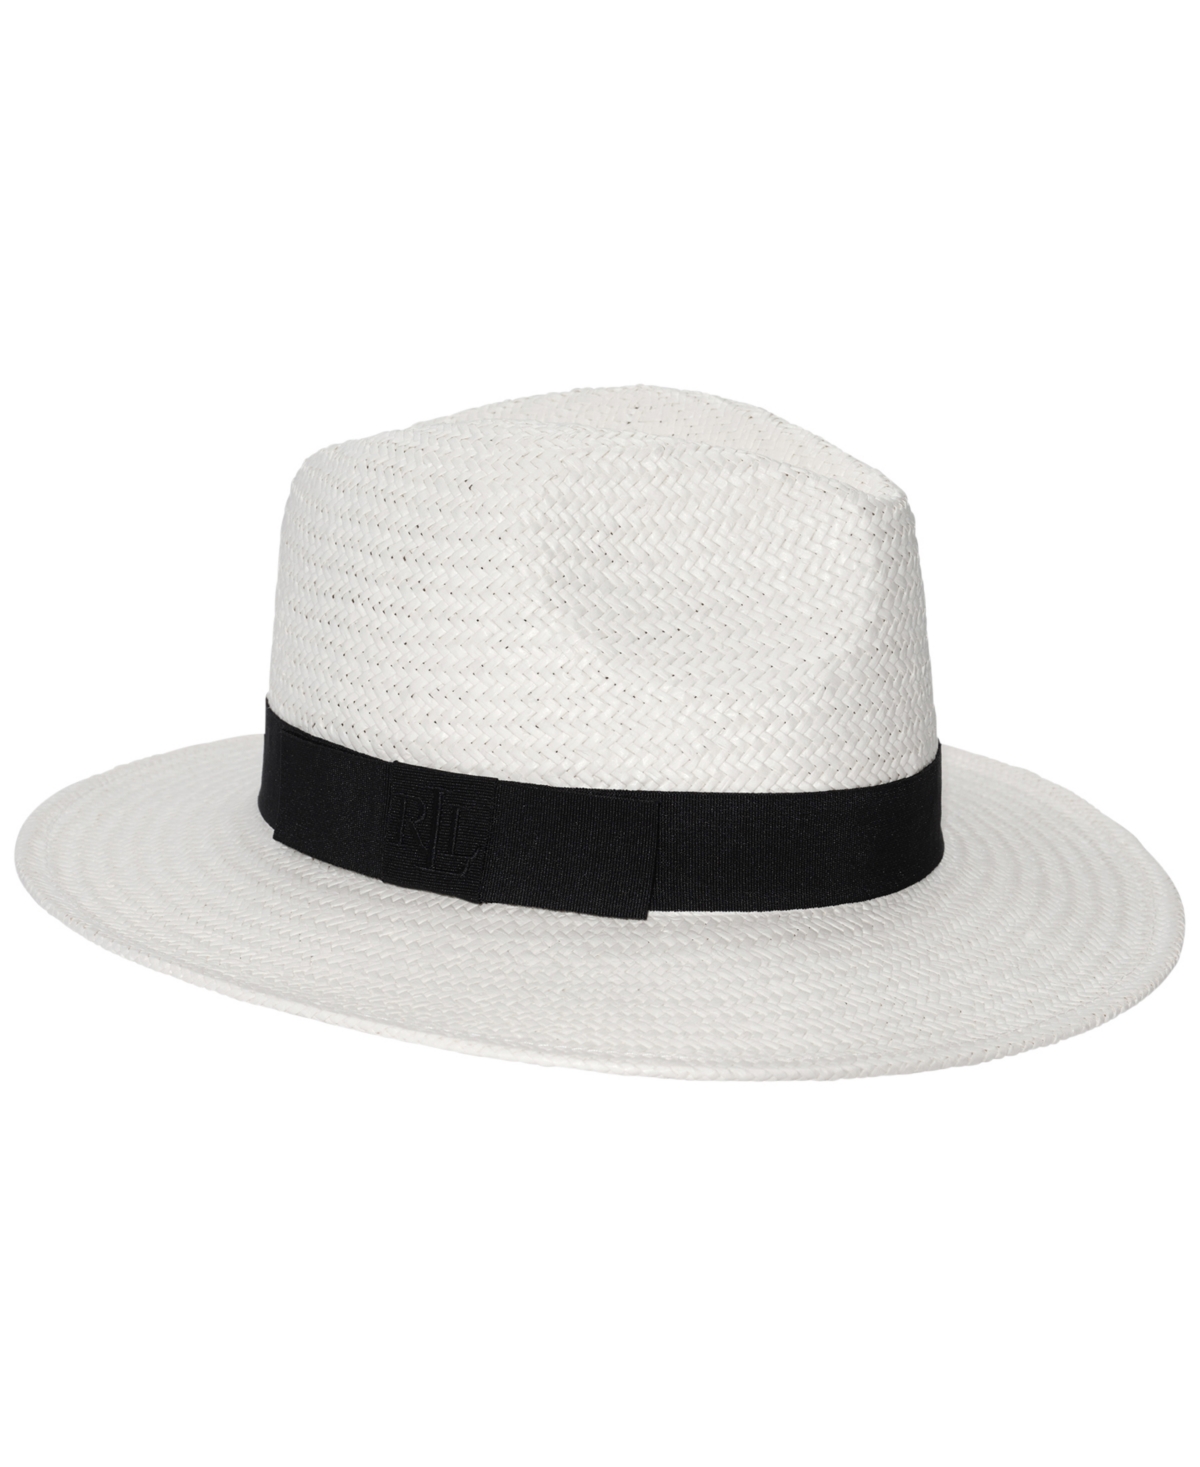 Heritage Fedora Hat - Natural, Black